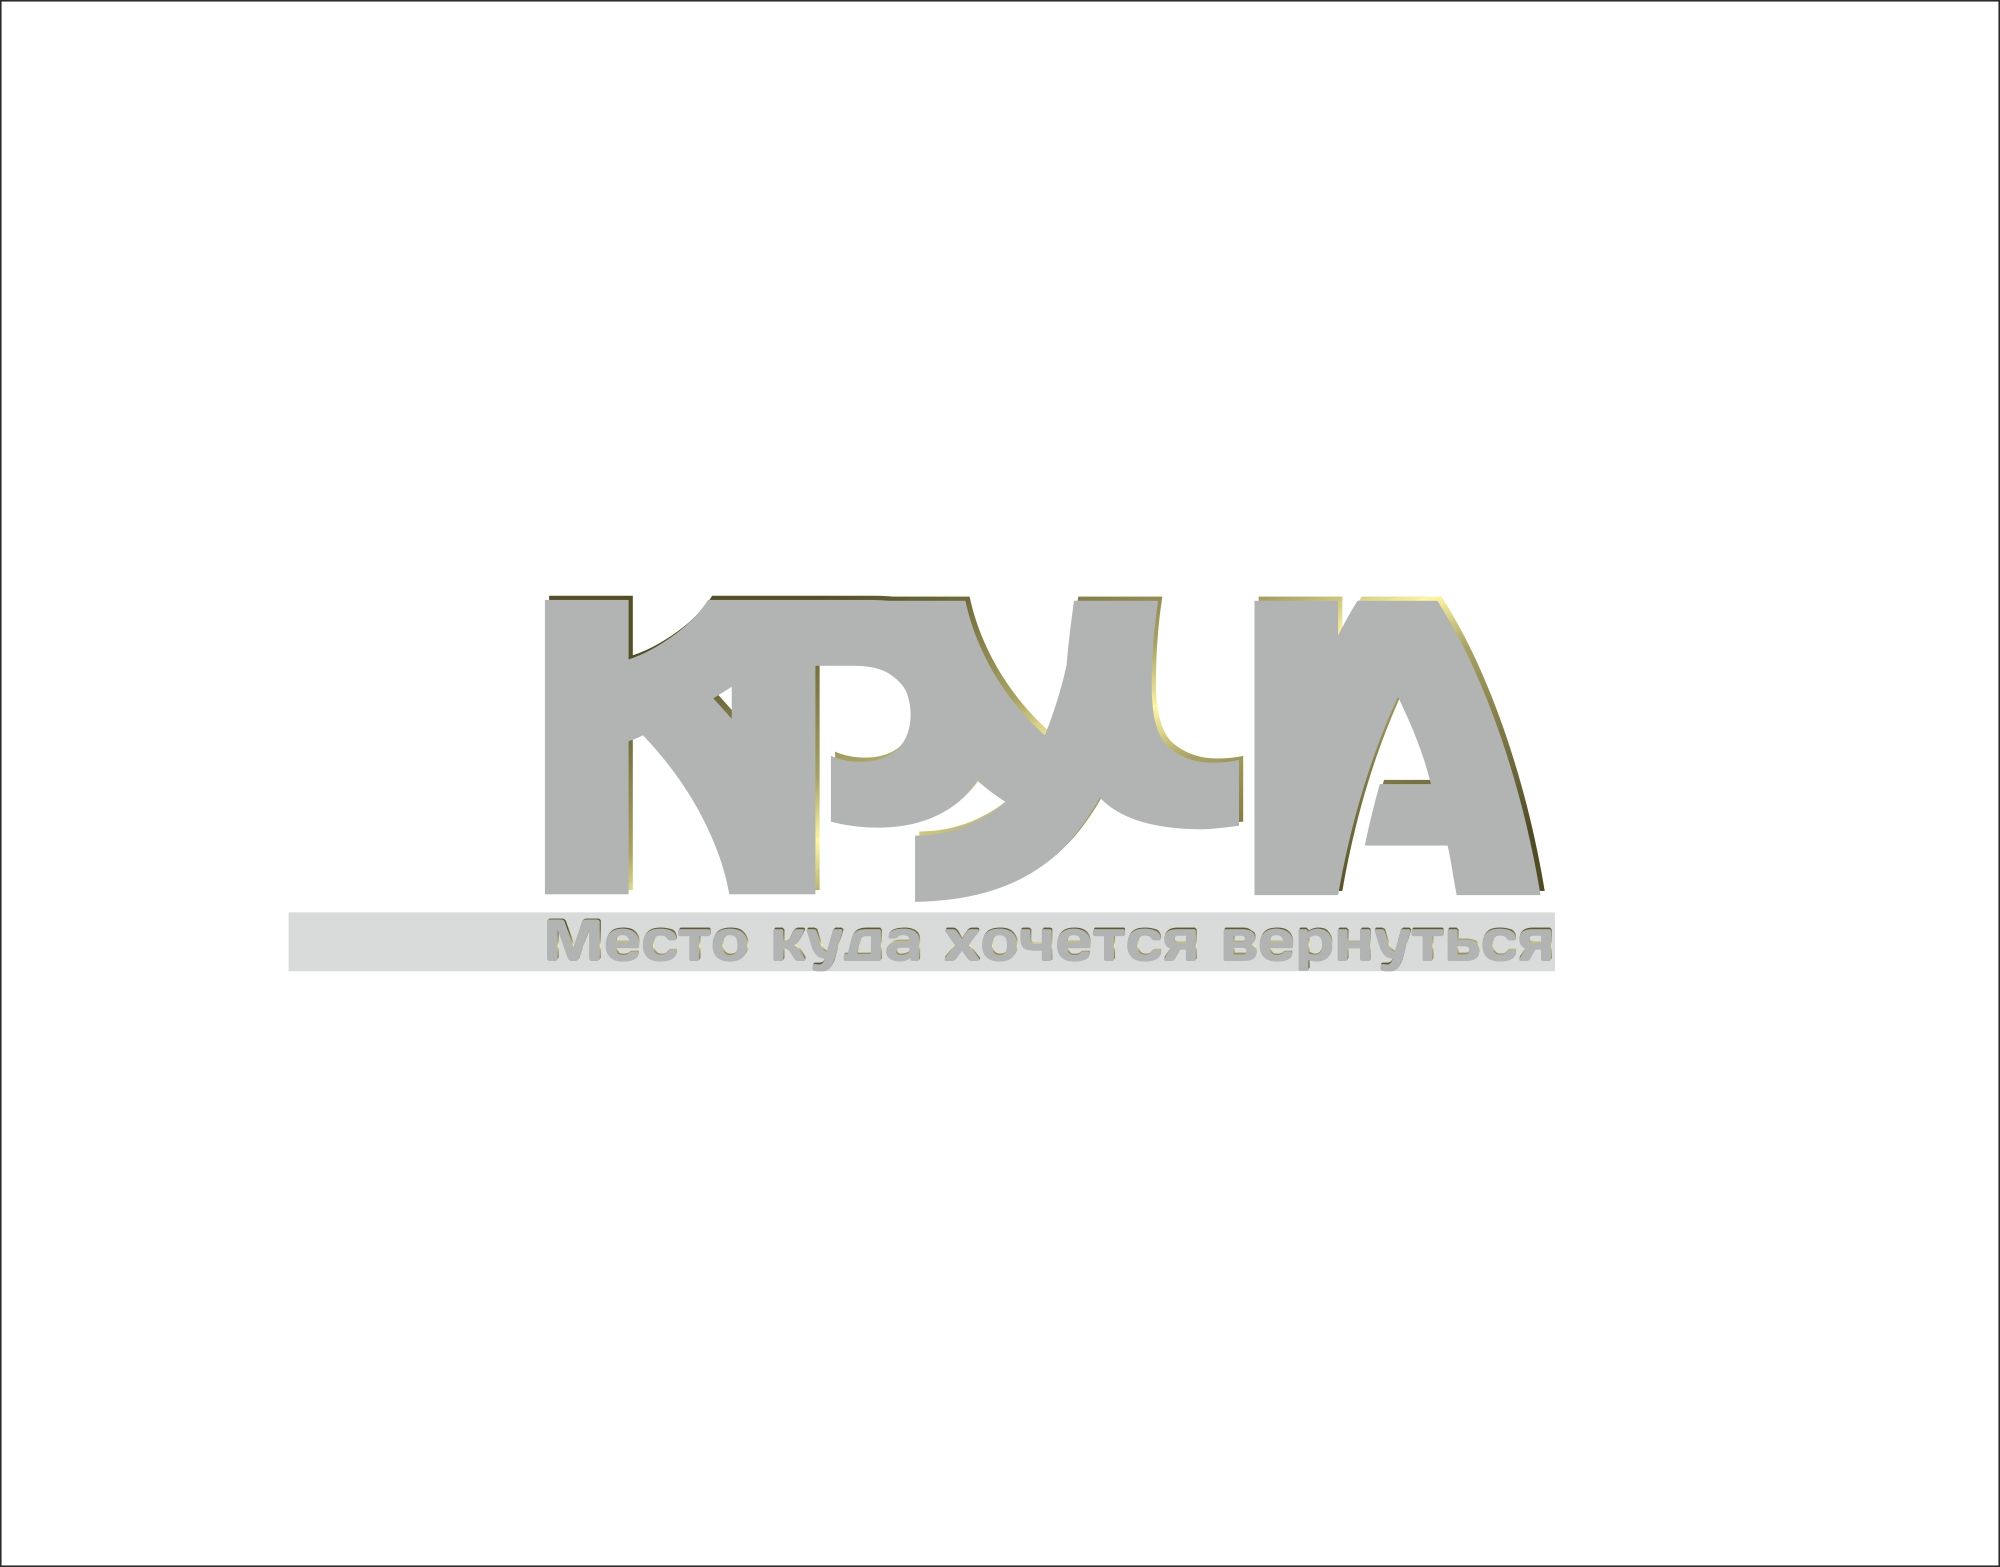 Логотип ресторана Круча - дизайнер maks_mir